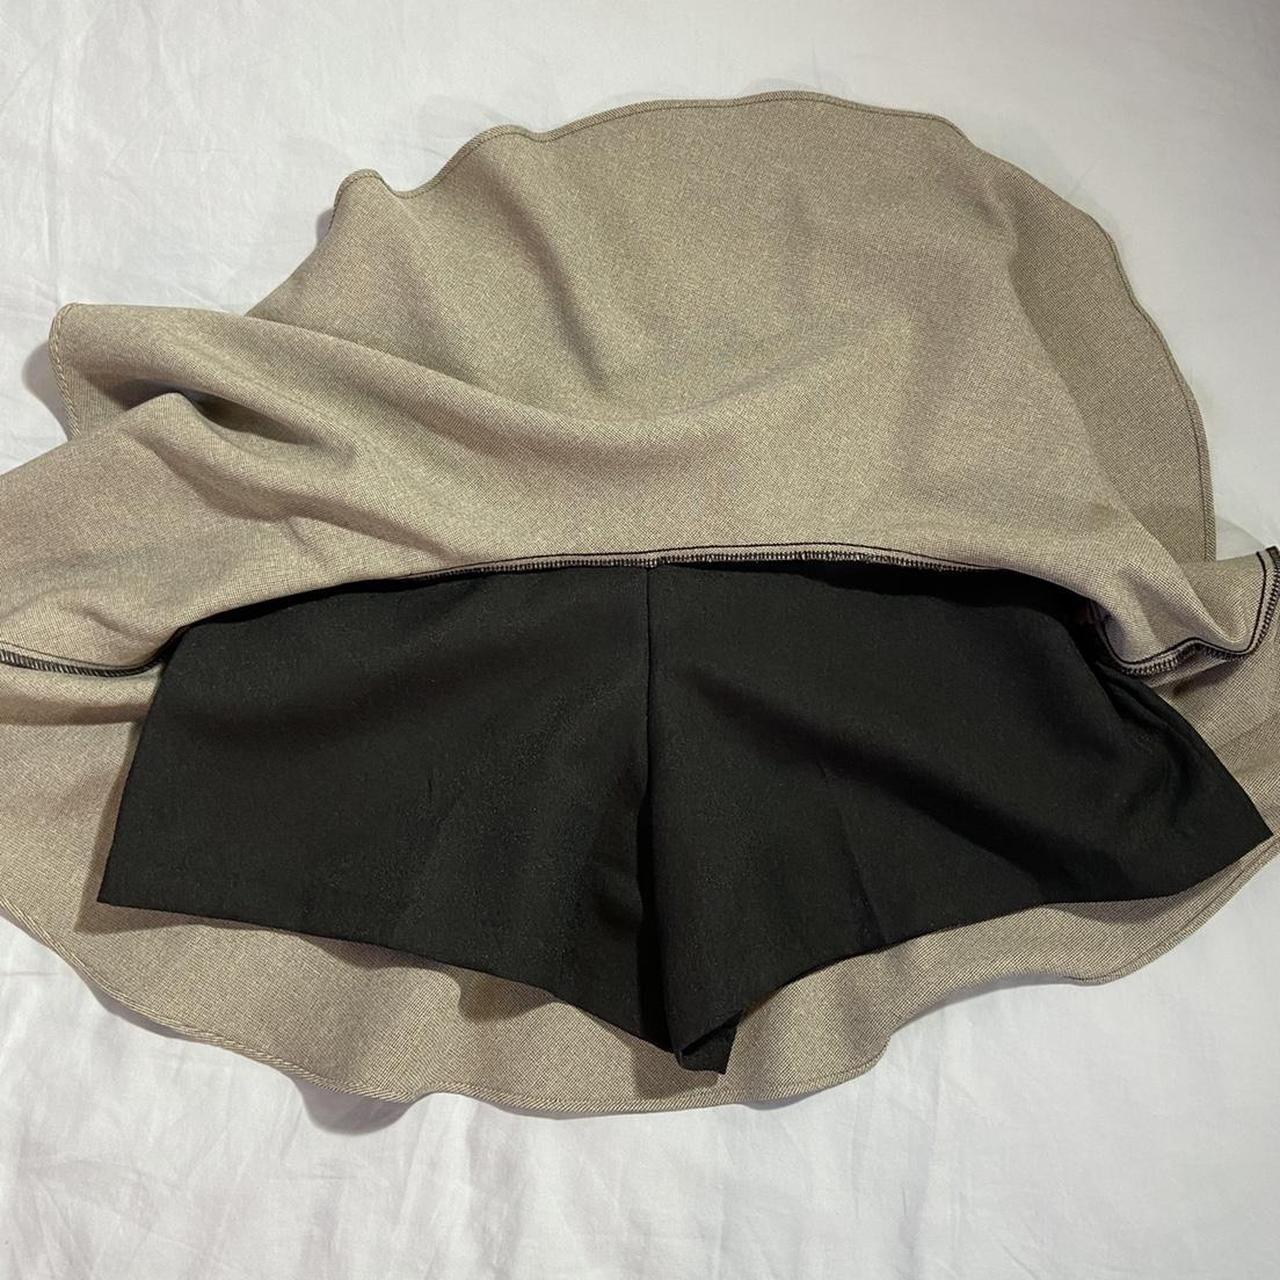 Stylenanda Women's Grey and Black Skirt (3)